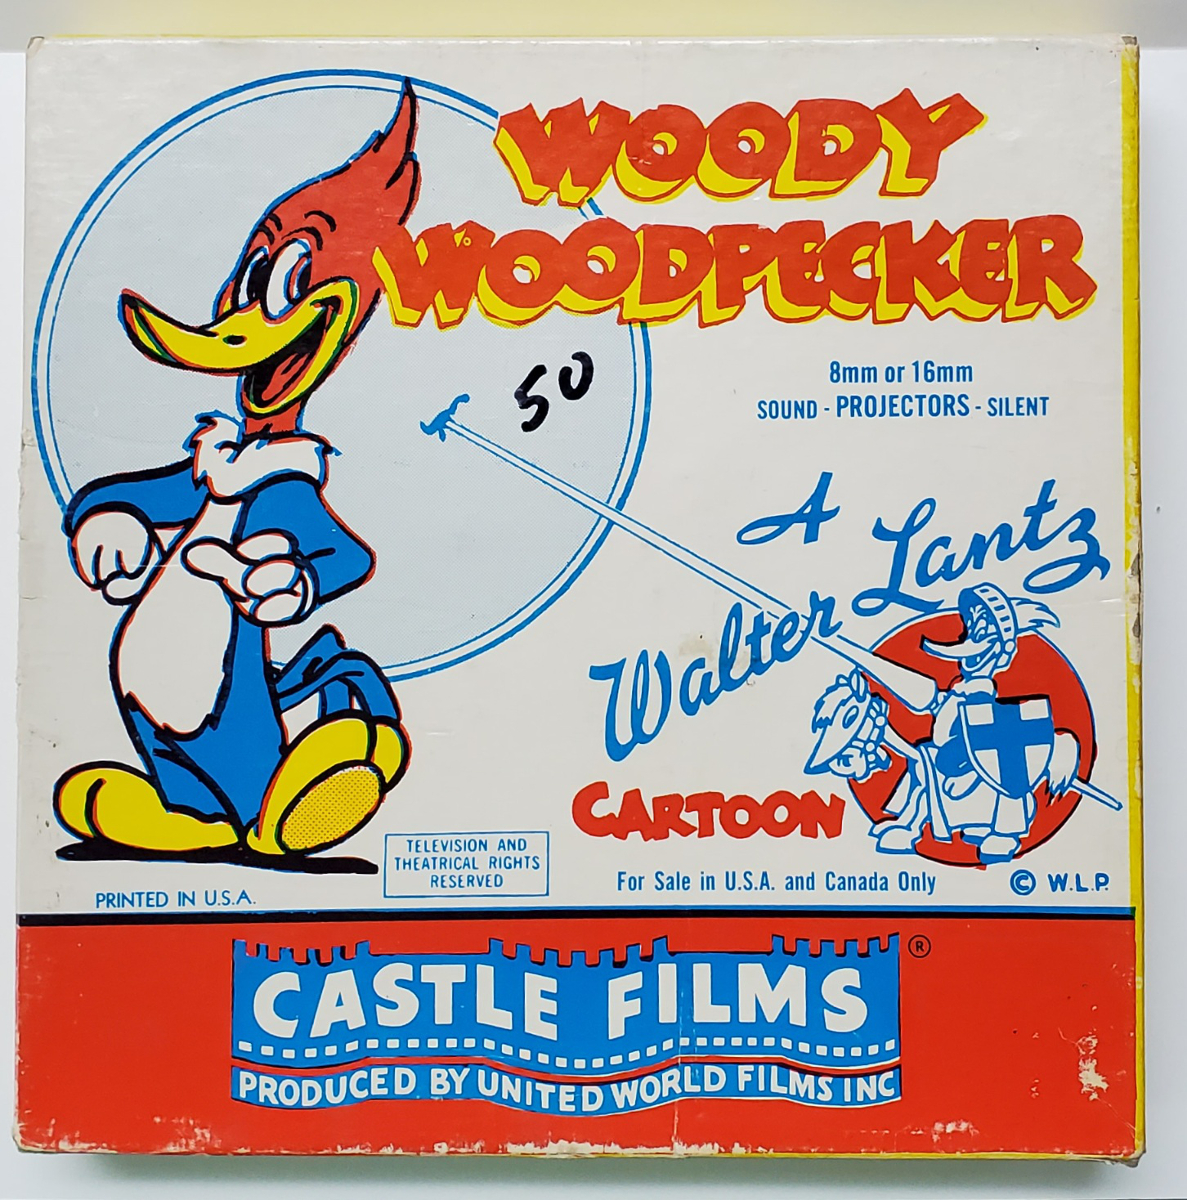 https://thetoystimeforgot.com/wp-content/uploads/2022/07/castle-films-woody-woodpecker-hot-rod-huckster-1.jpg